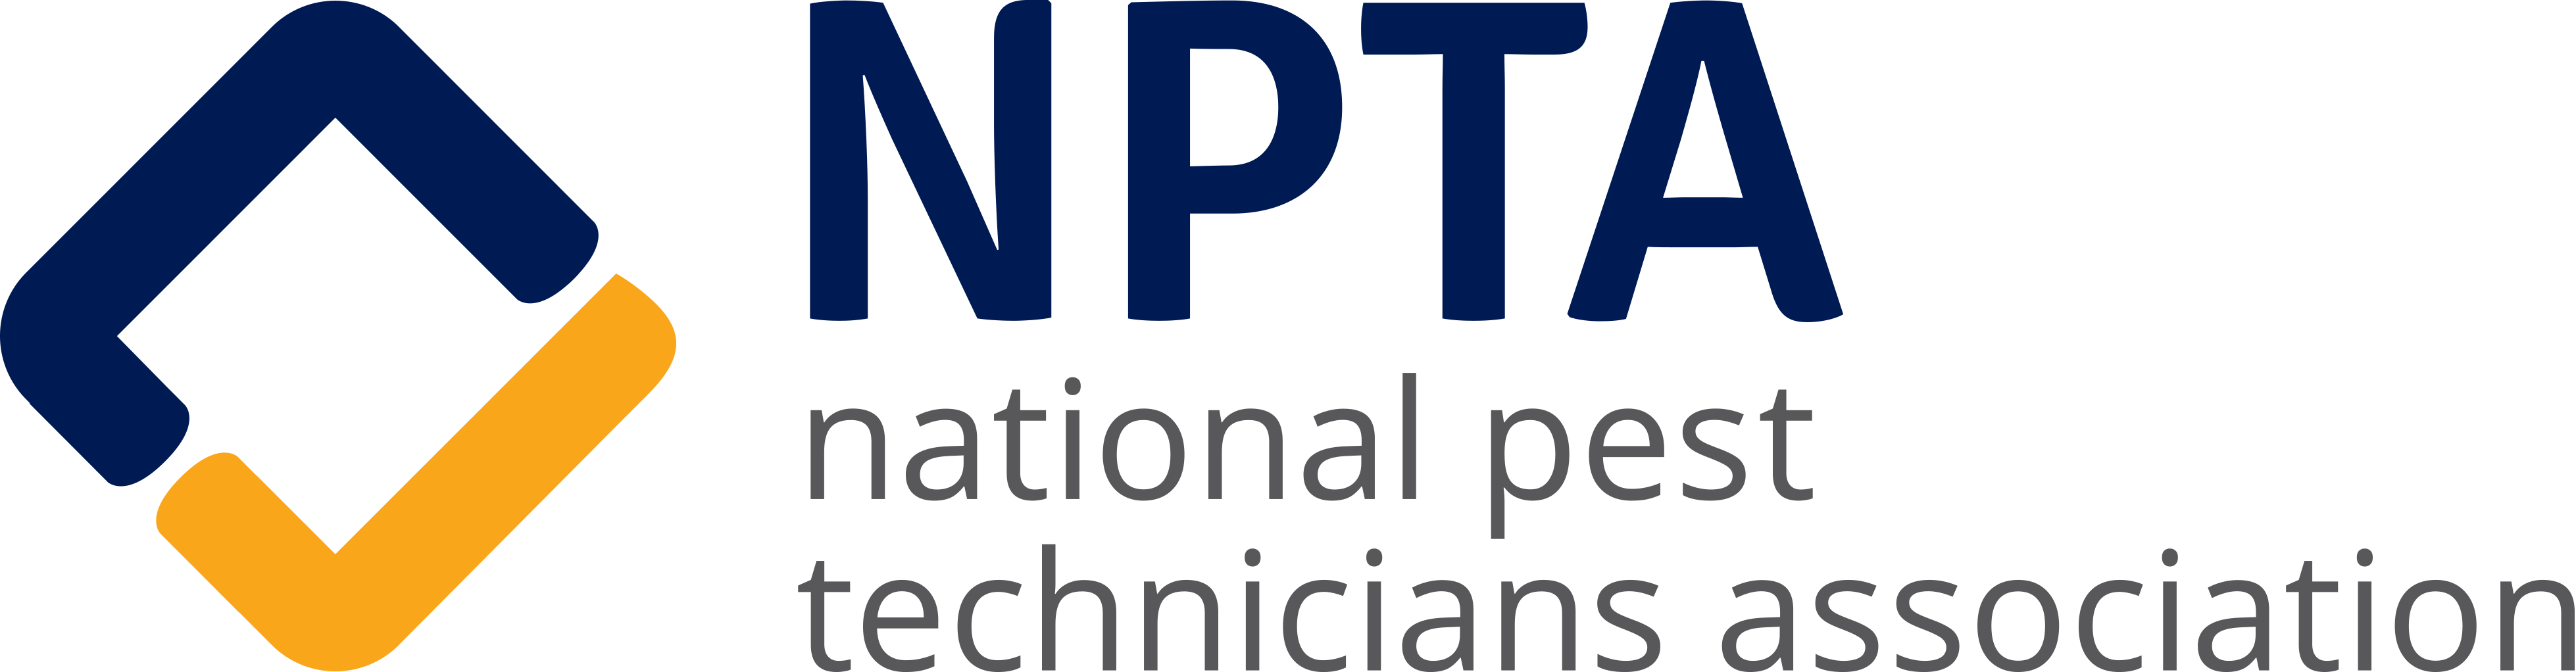 NPTA Name[1] - Copy